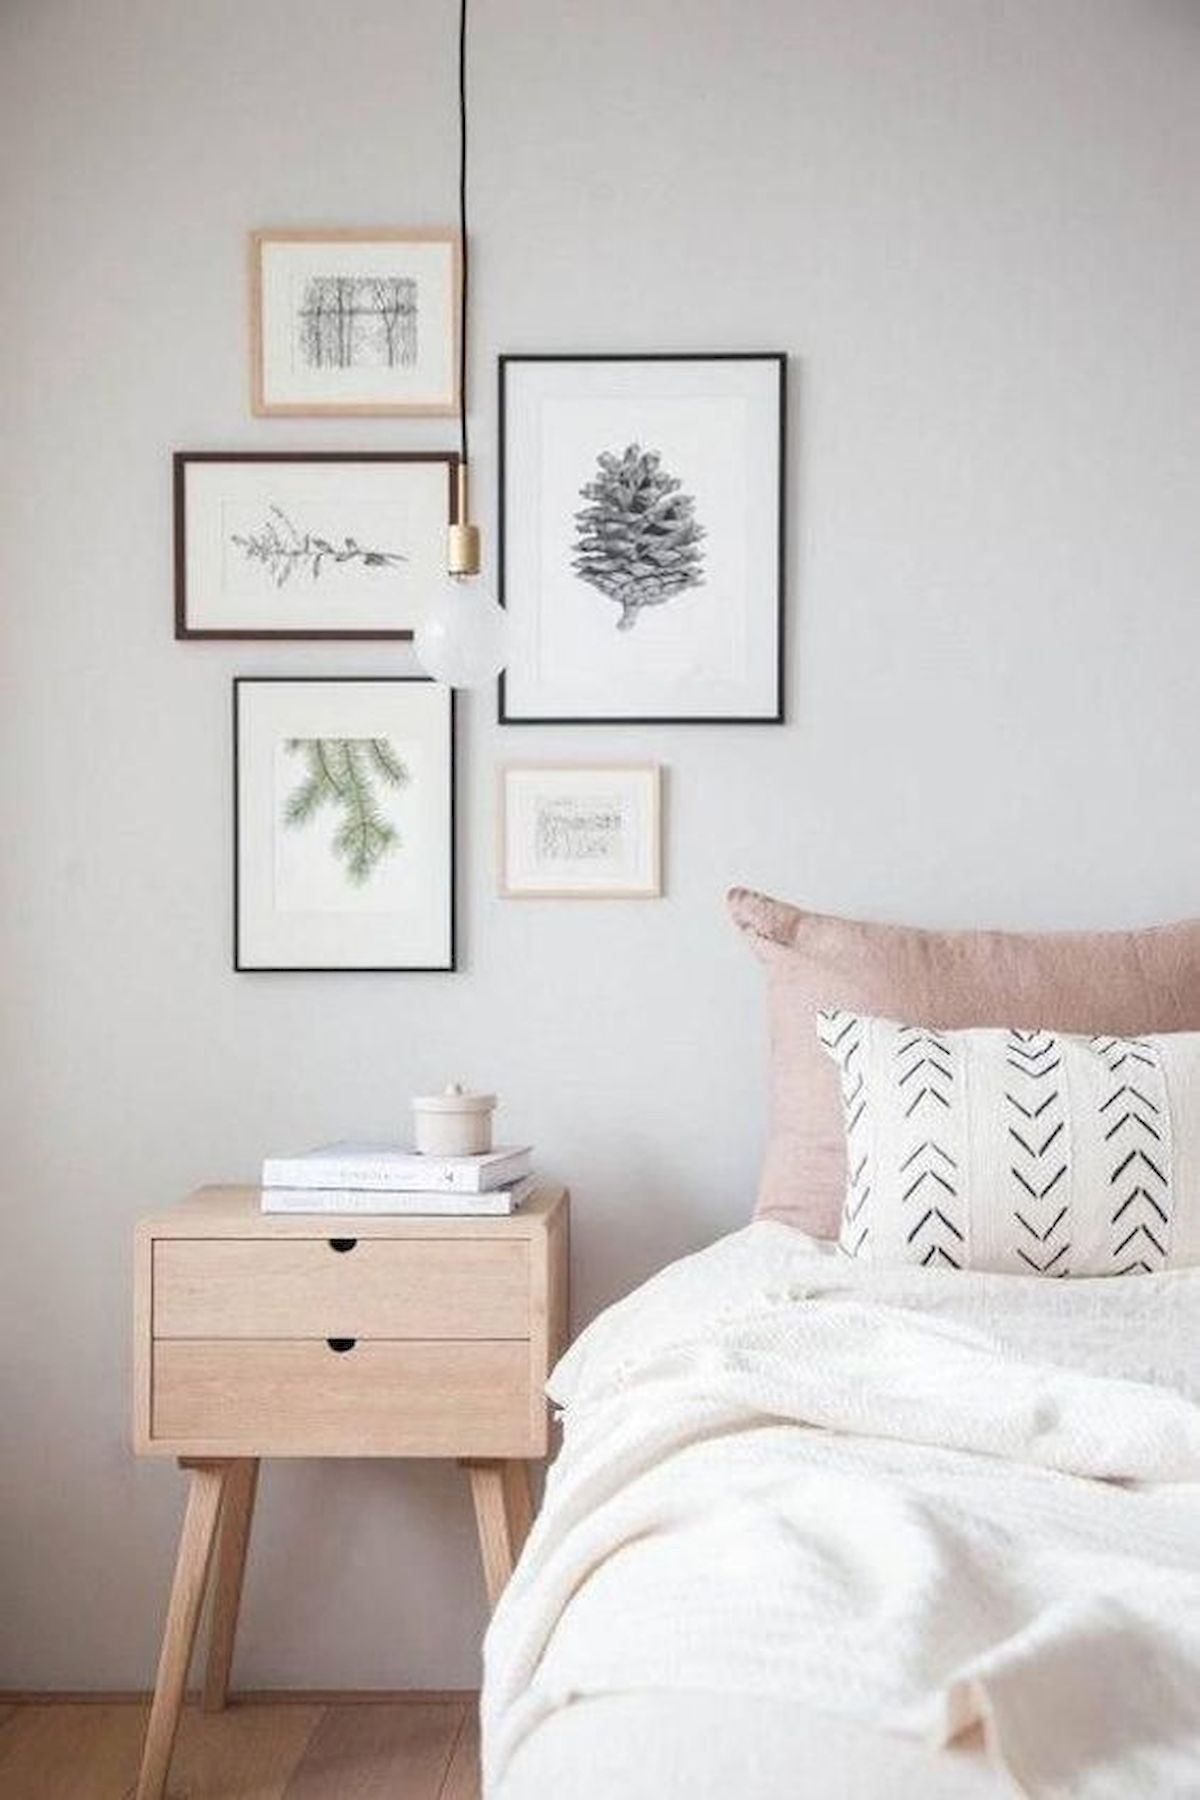 60 Beautiful Bedroom Decor And Design Ideas (49)